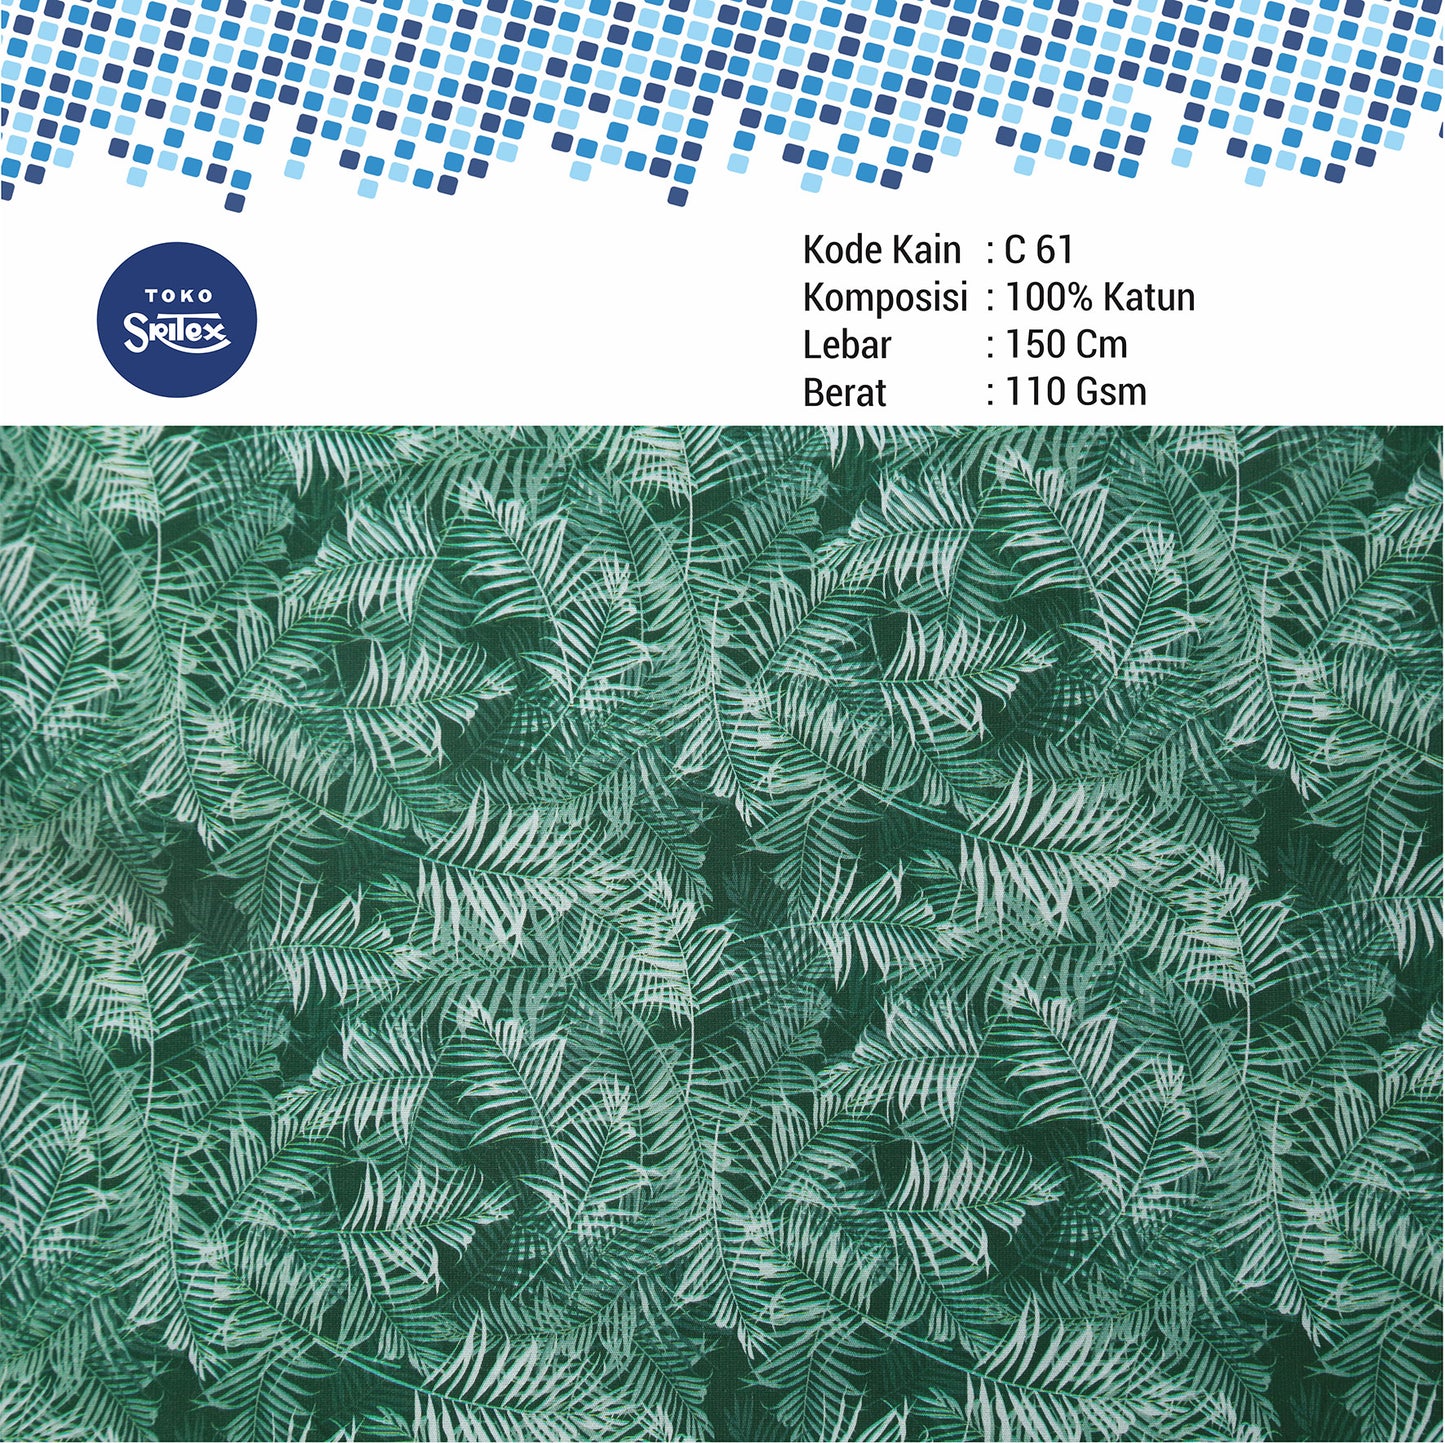 Toko Sritex Kain Katun Print Lumut Daun Premium Ekspor, C61. Harga per 45cm, Lebar 150cm.